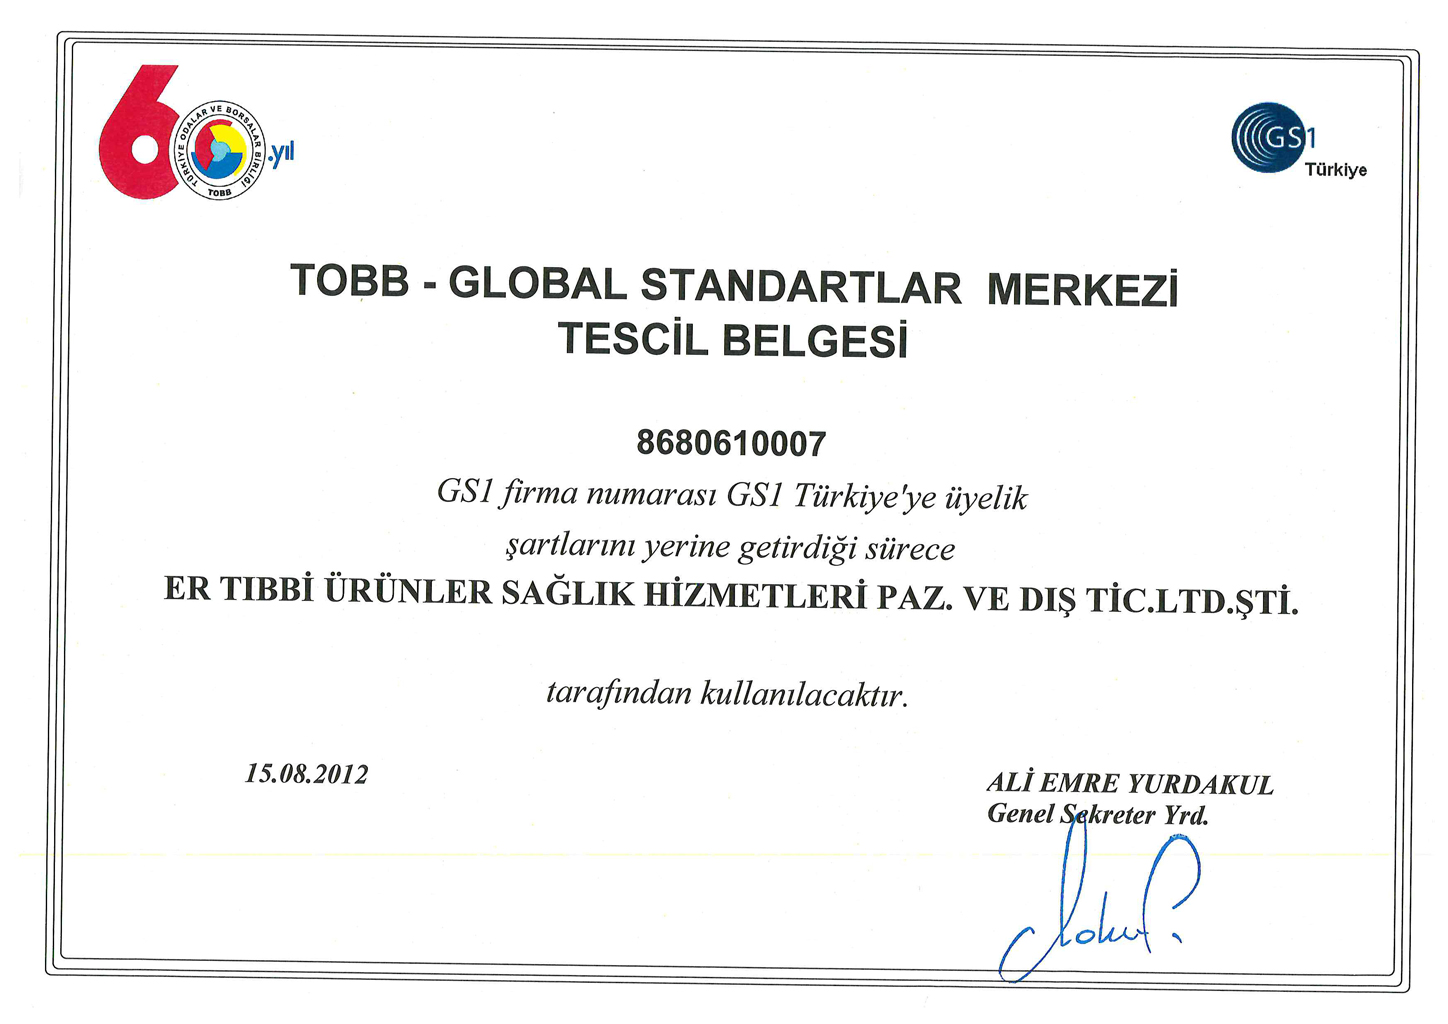 TOBB Registration Certificate